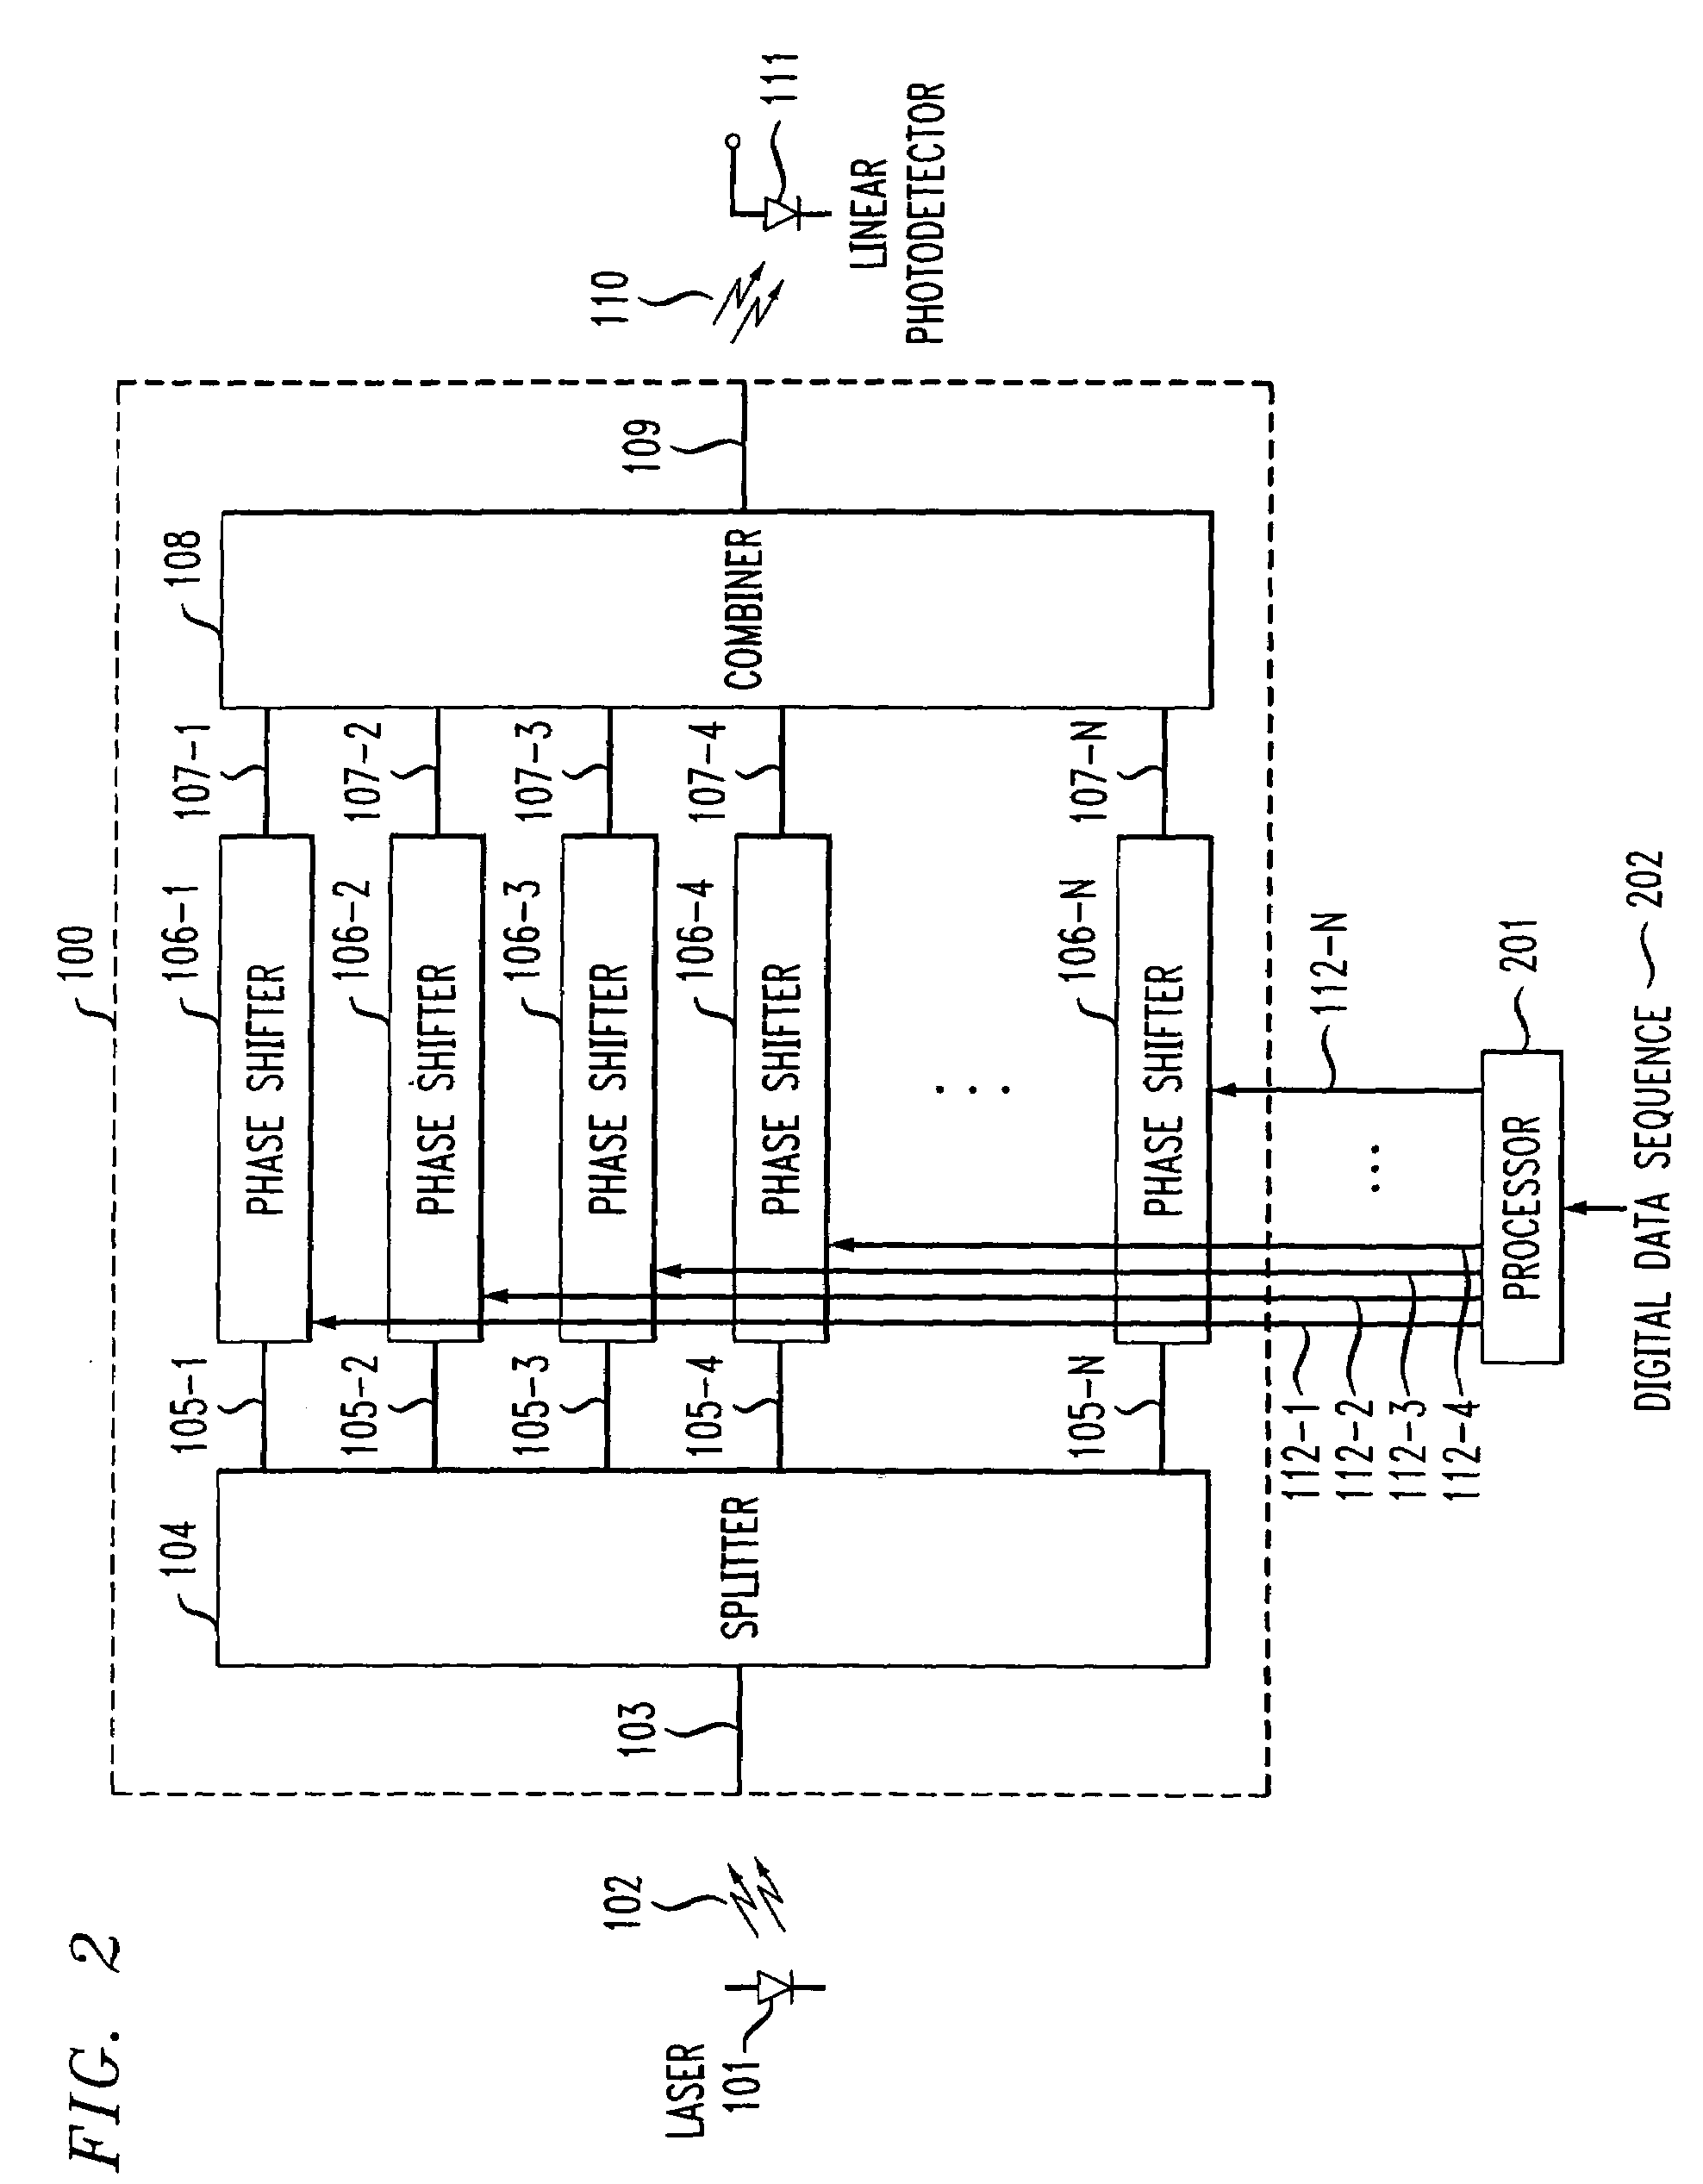 Optical digital-to-analog converter